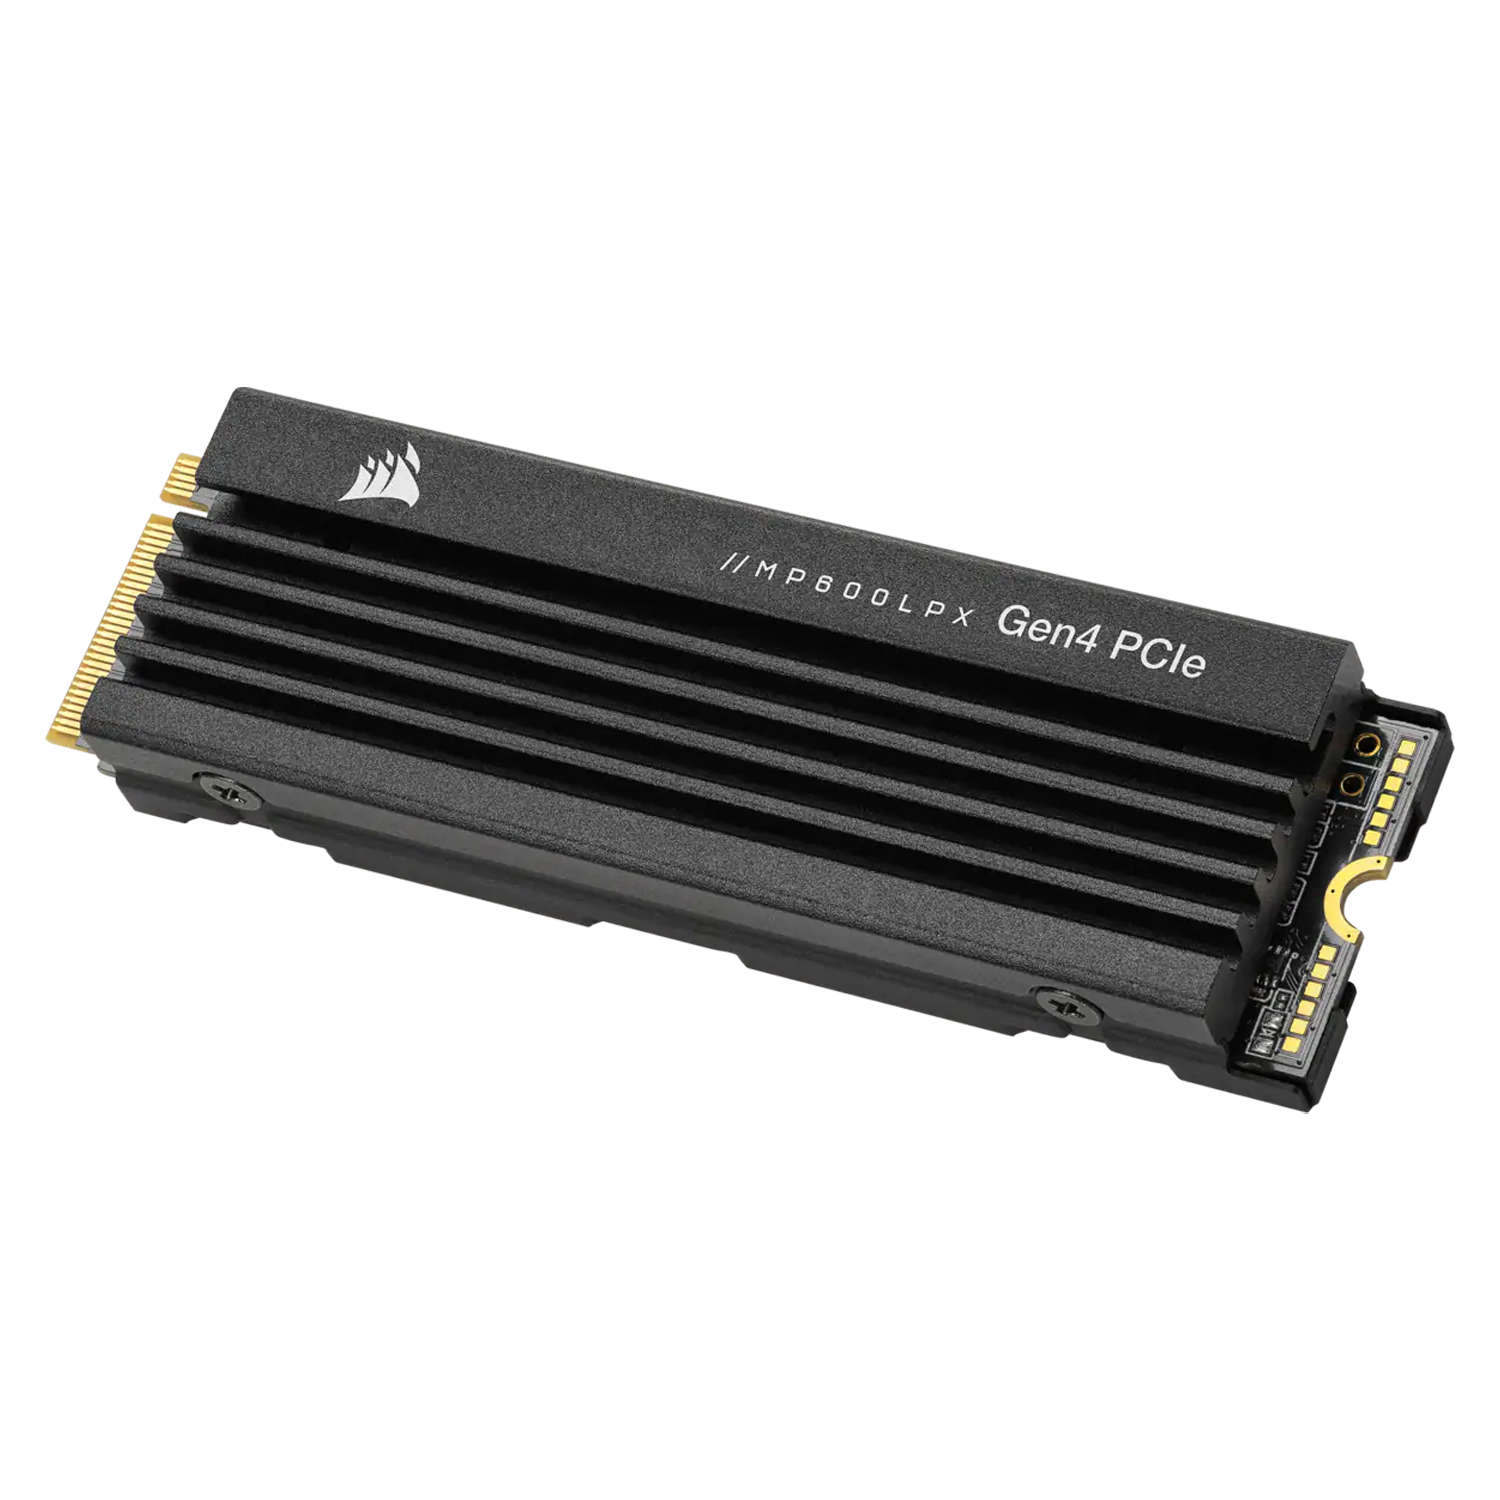 SSD M.2 Corsair MP600 Pro LPX 500GB / NVMe PCIe Gen4 - (F0500GBMP600PLP)

